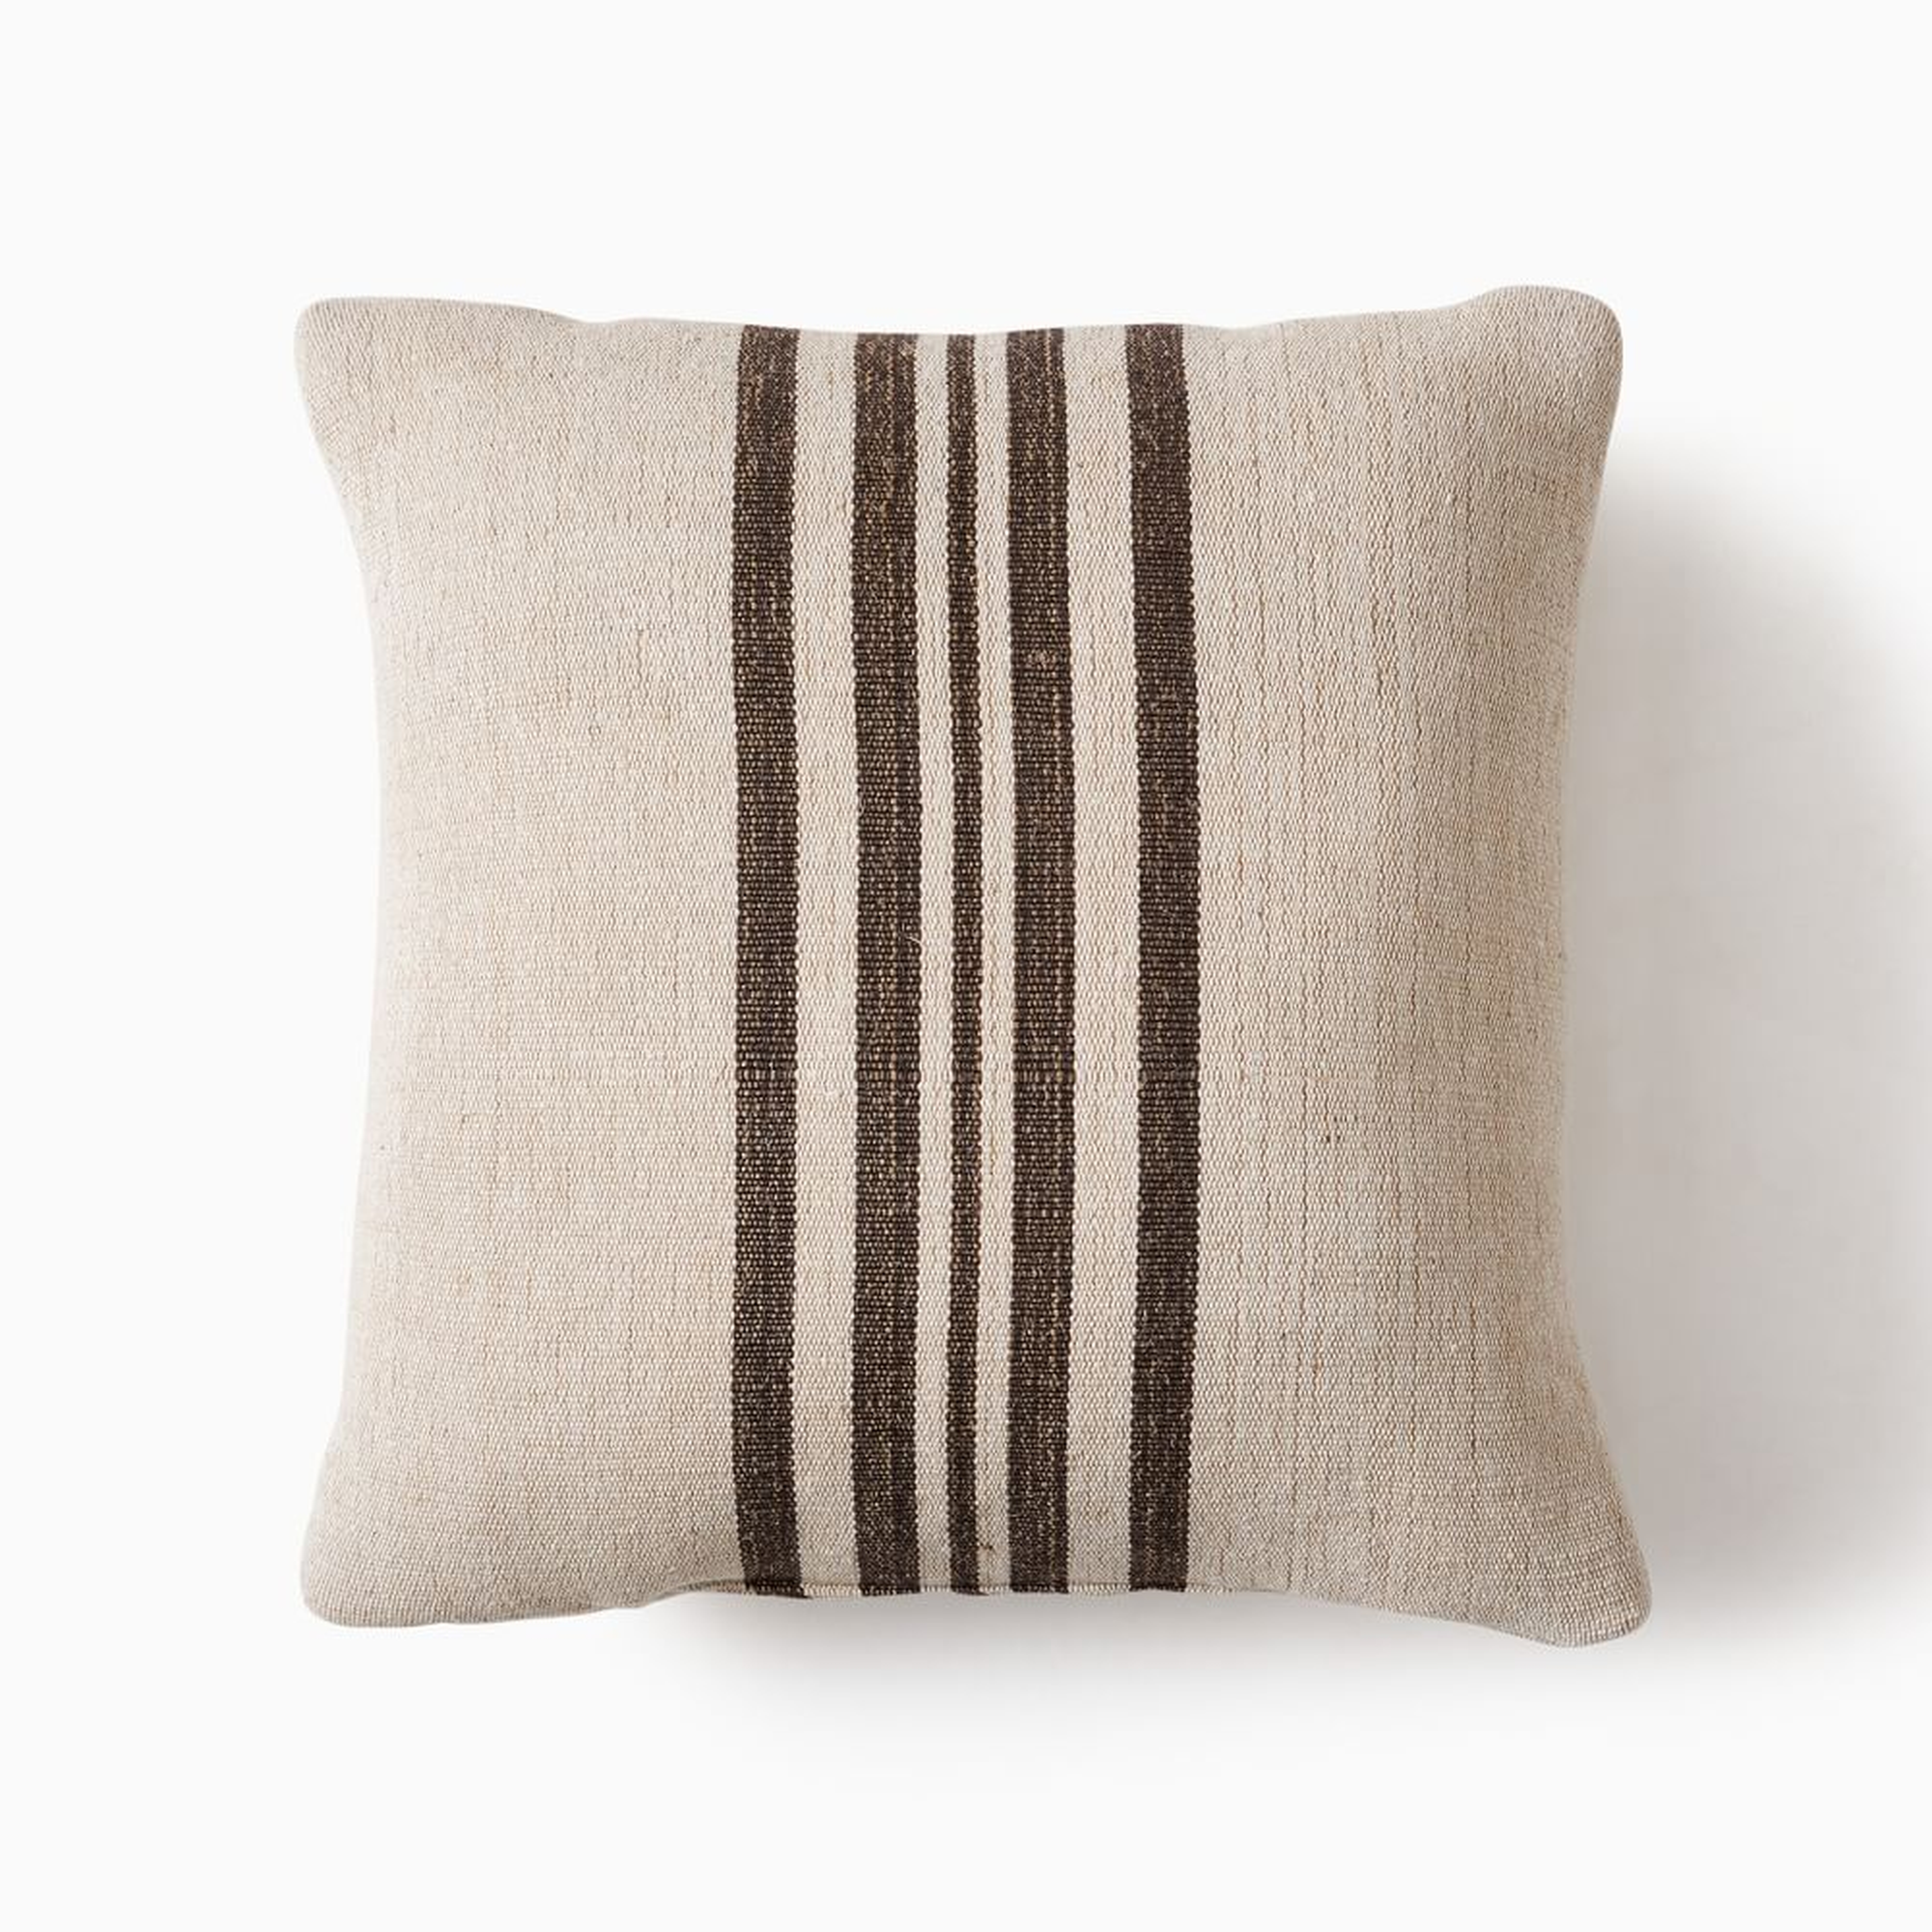 Outdoor Natural Center Stripe Pillow, 18"x18", Natural/Black - West Elm